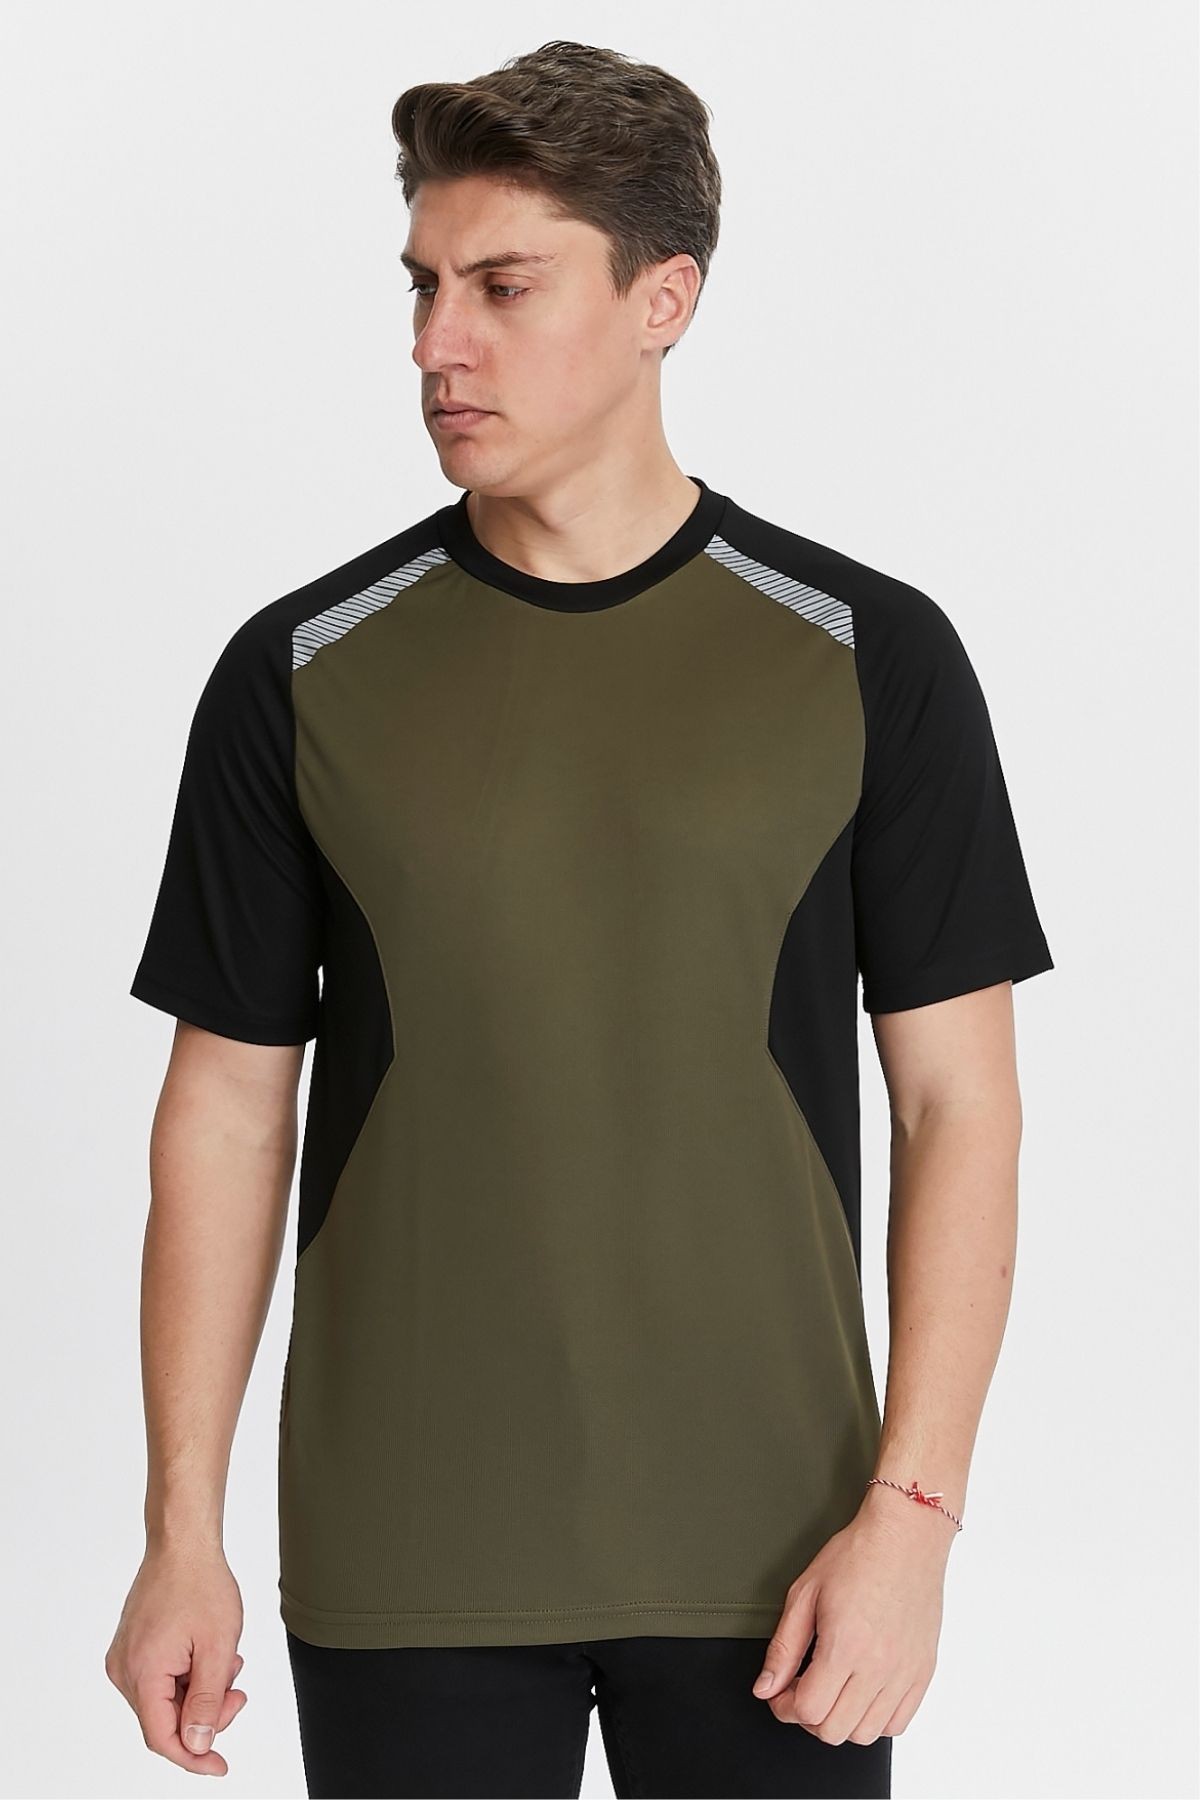 Uniprom Erkek Sıfır Yaka Tişört Nefes Alan Kumaş Procool Spor Outdoor T-shirt Haki-Siyah